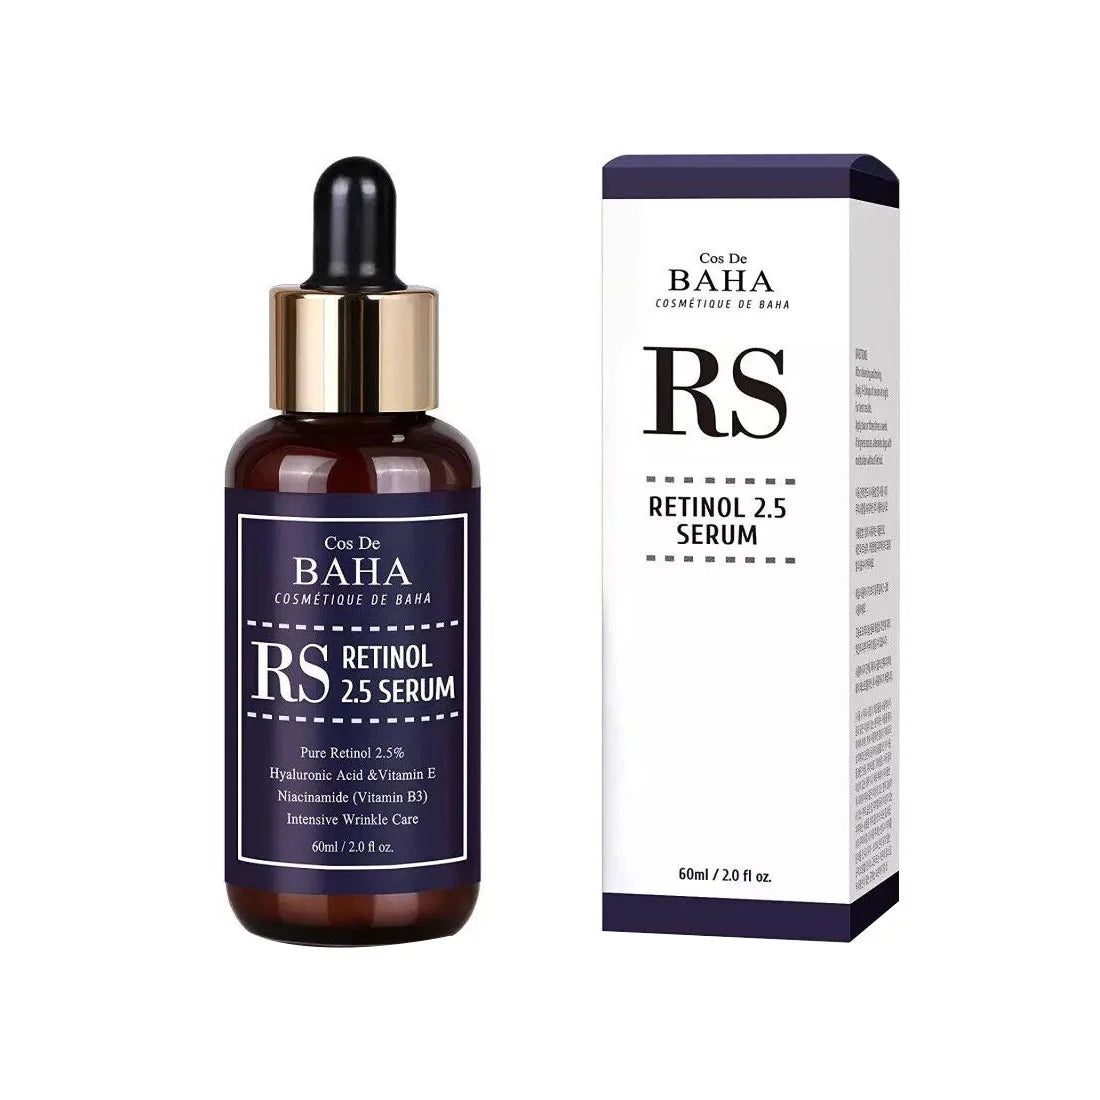 Cos De Baha RS Retinol 2.5 Serum Jumbo intensive wrinkle fine line signs of aging skin care mature sagging skin dry dull skin K Beauty World